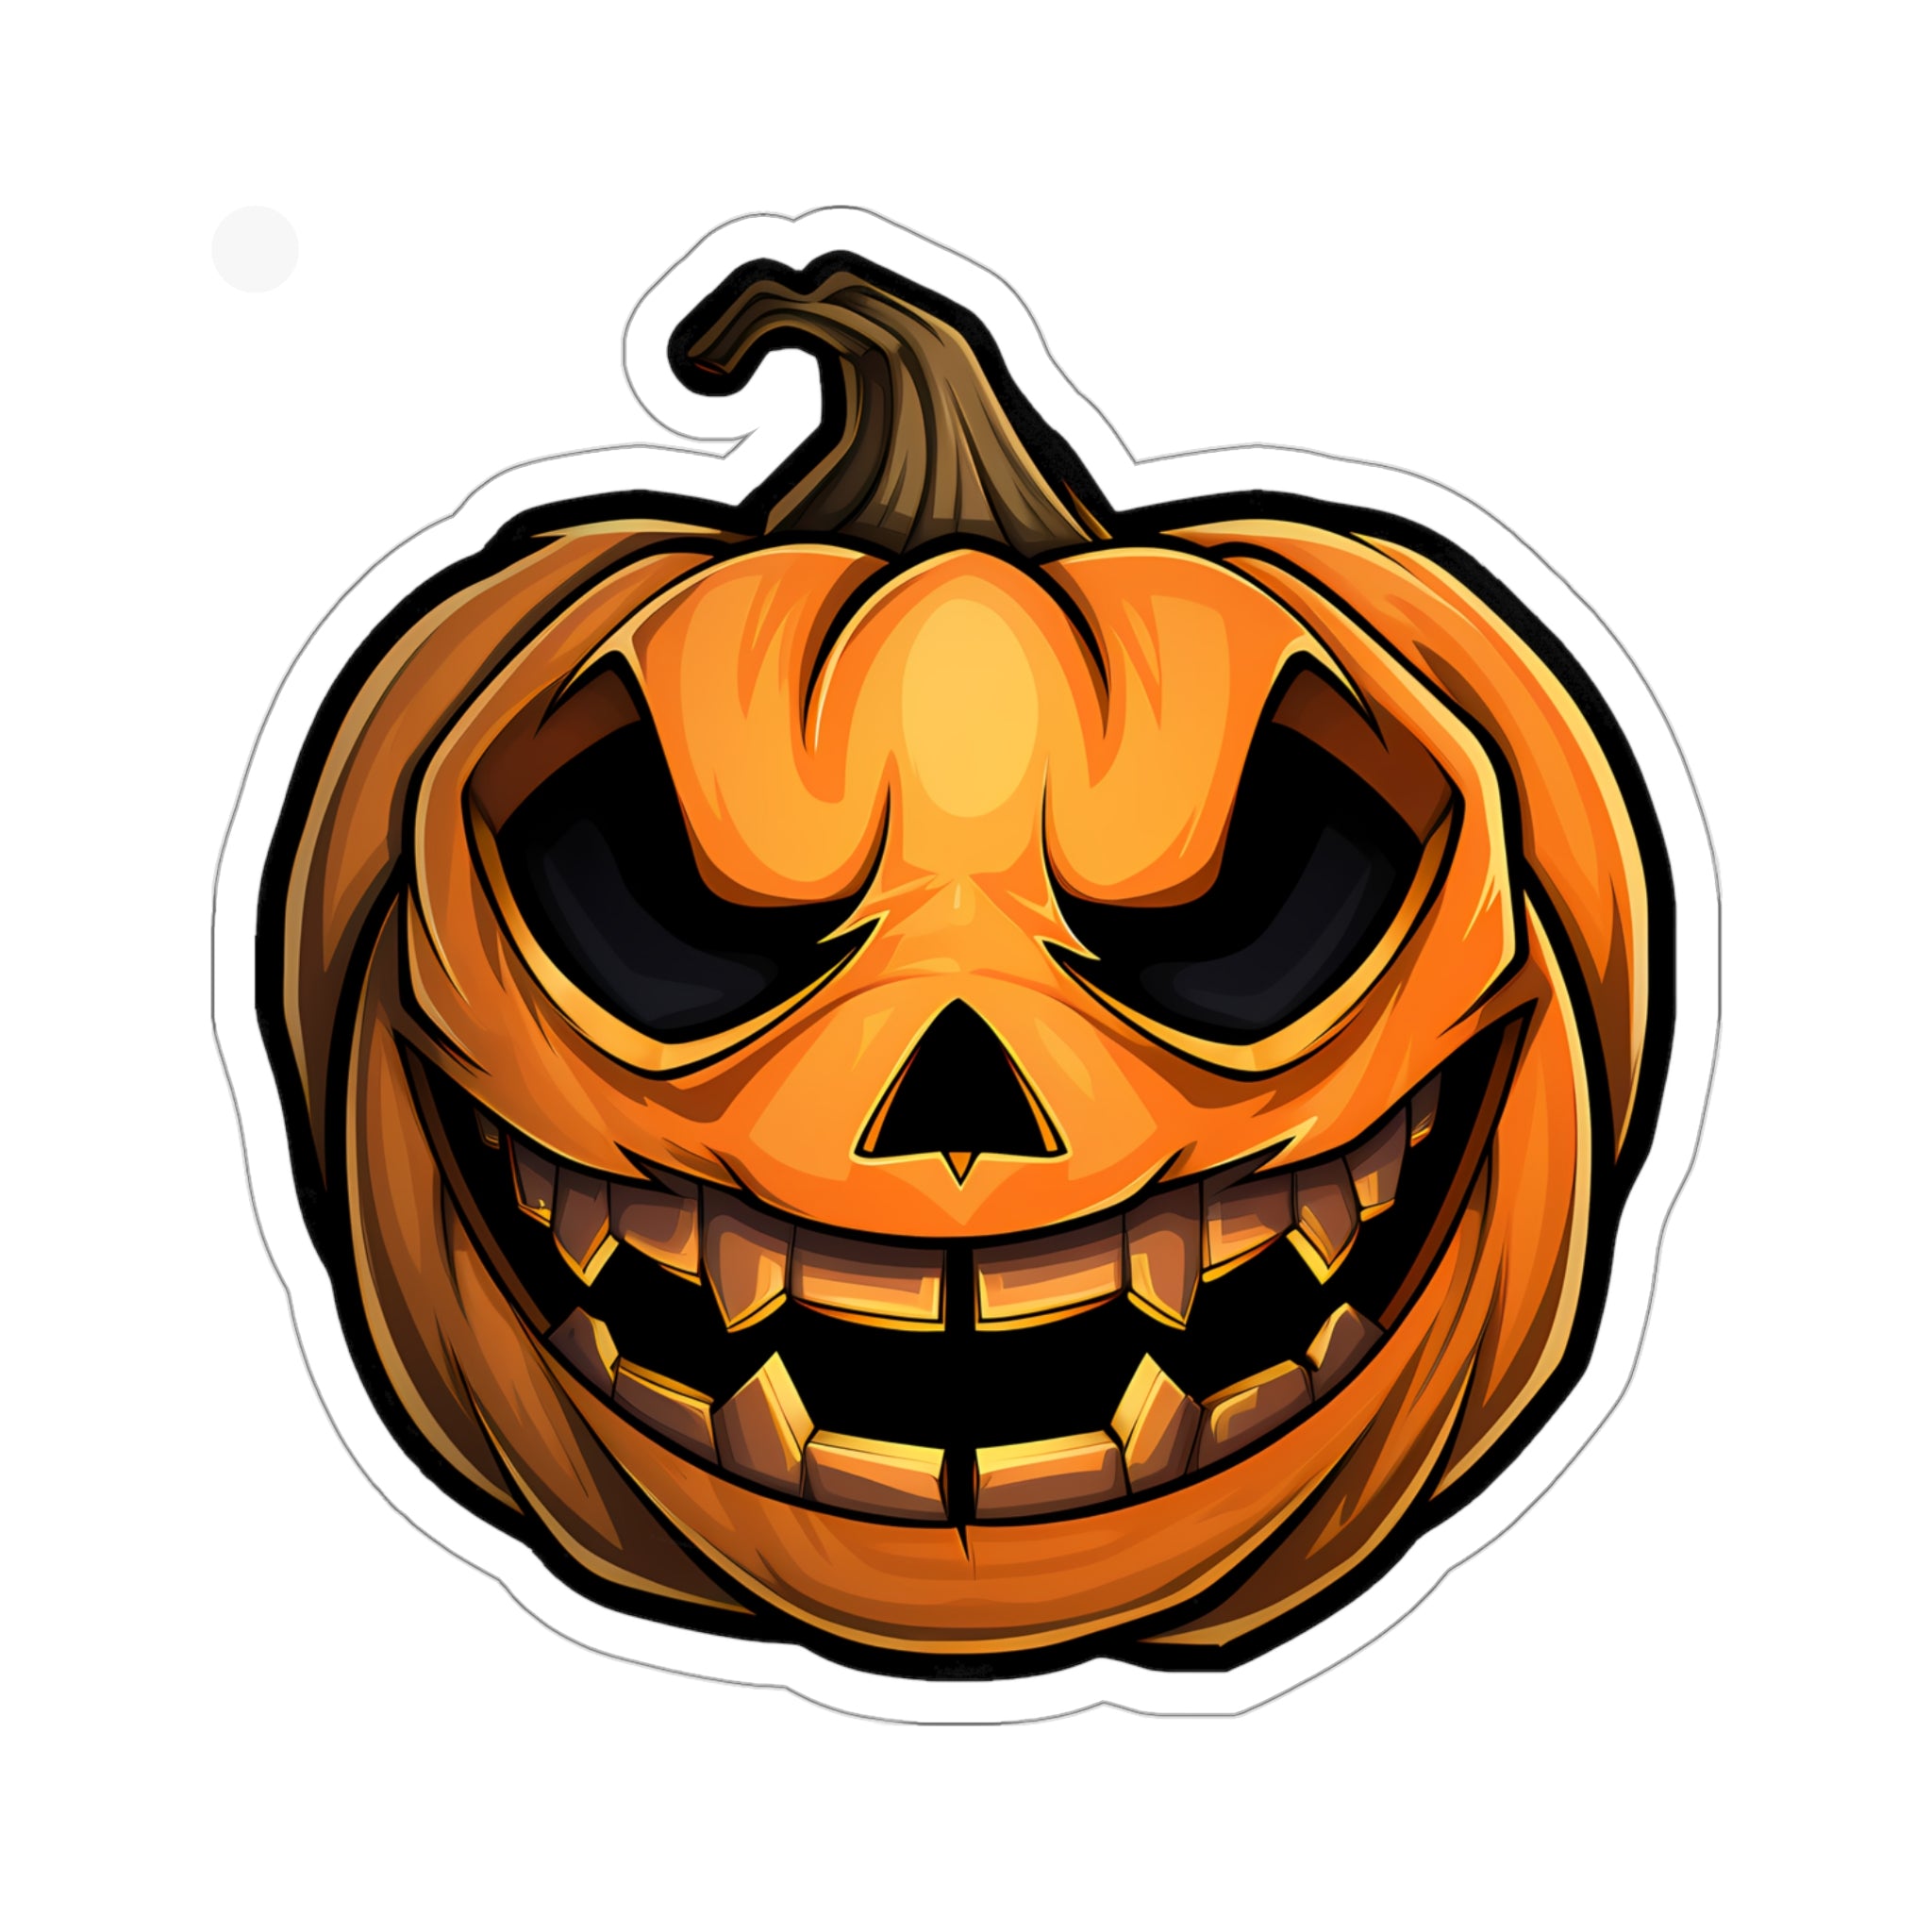 scary pumpkin cartoon